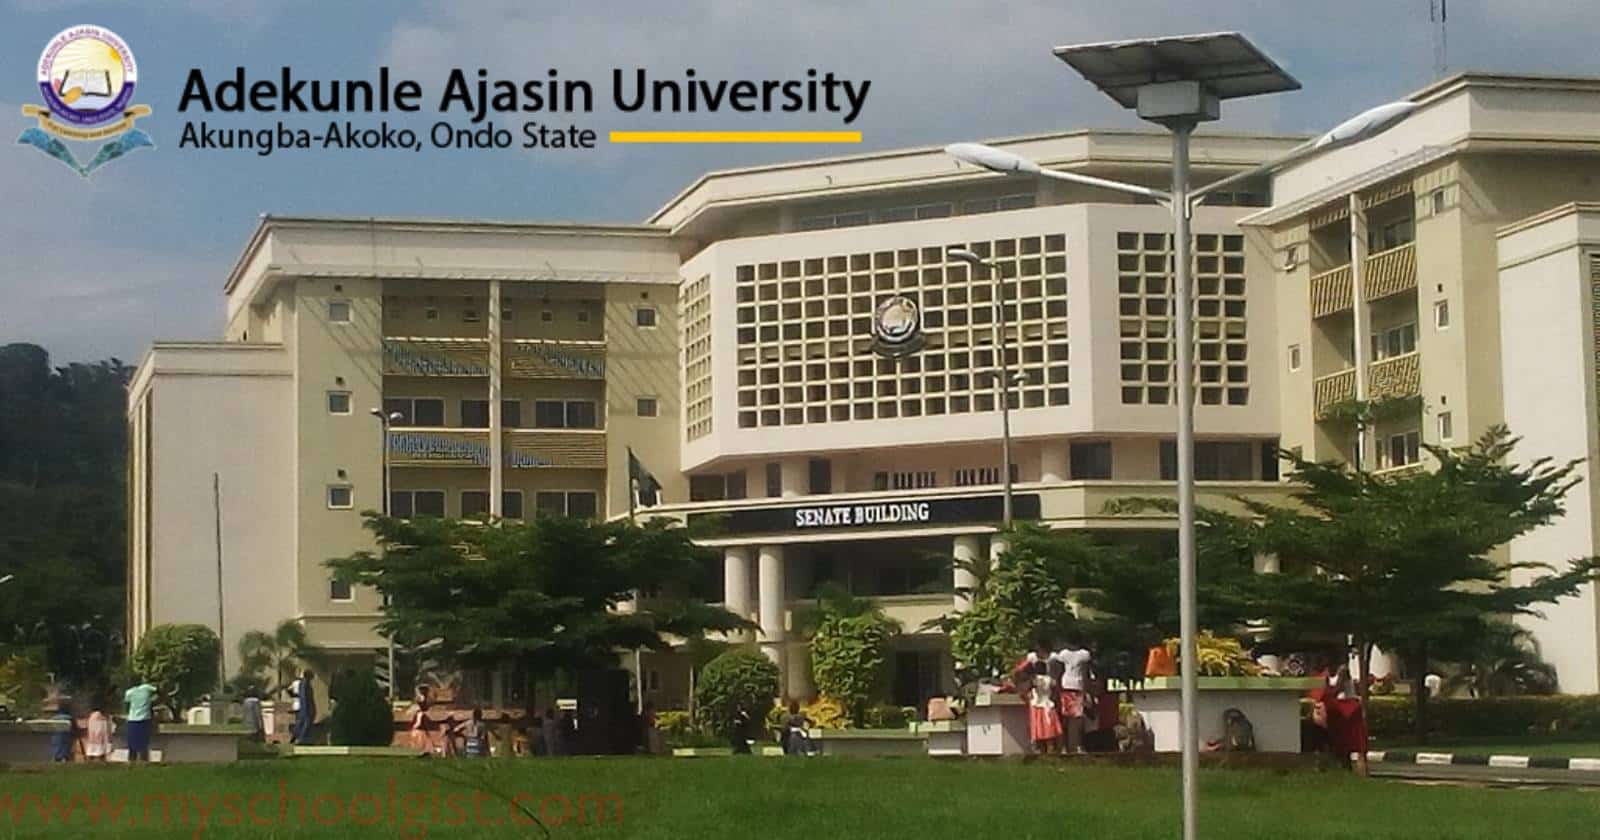 Adekunle Ajasin University Matriculation Ceremony